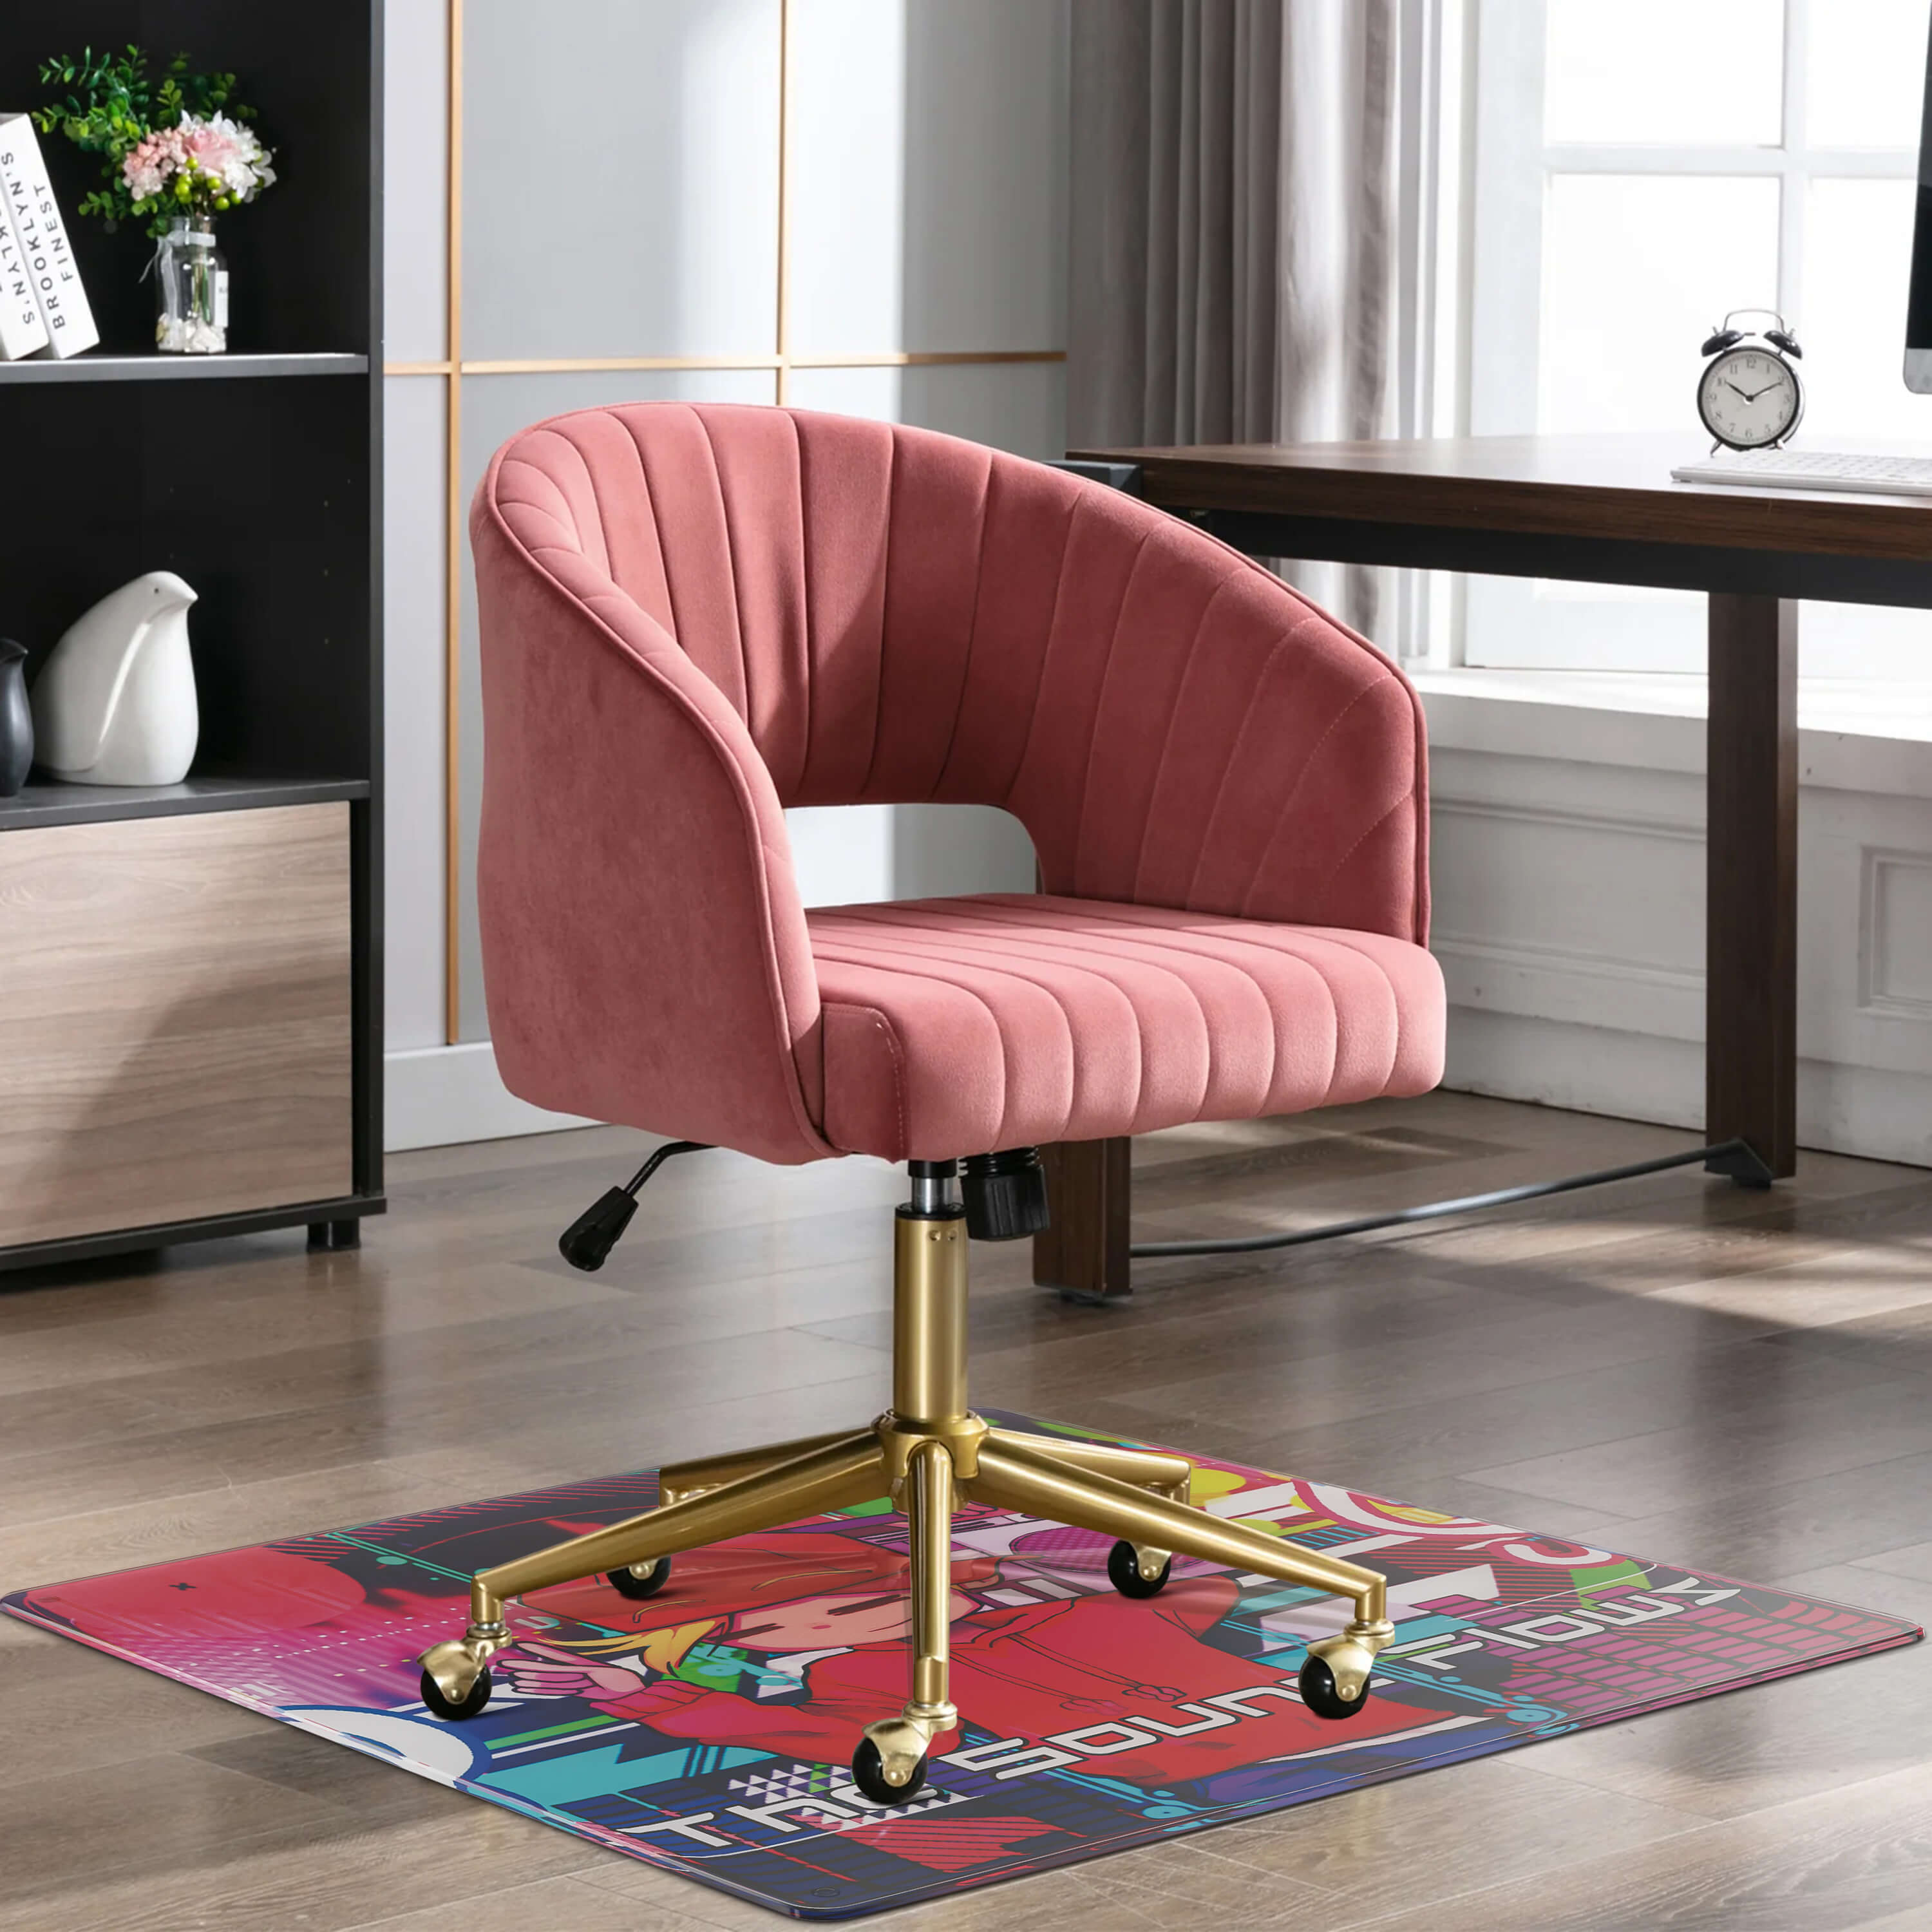 PINNKL Desk Chair mat for Carpeted Floors 2 mm Chair Mat for Hard